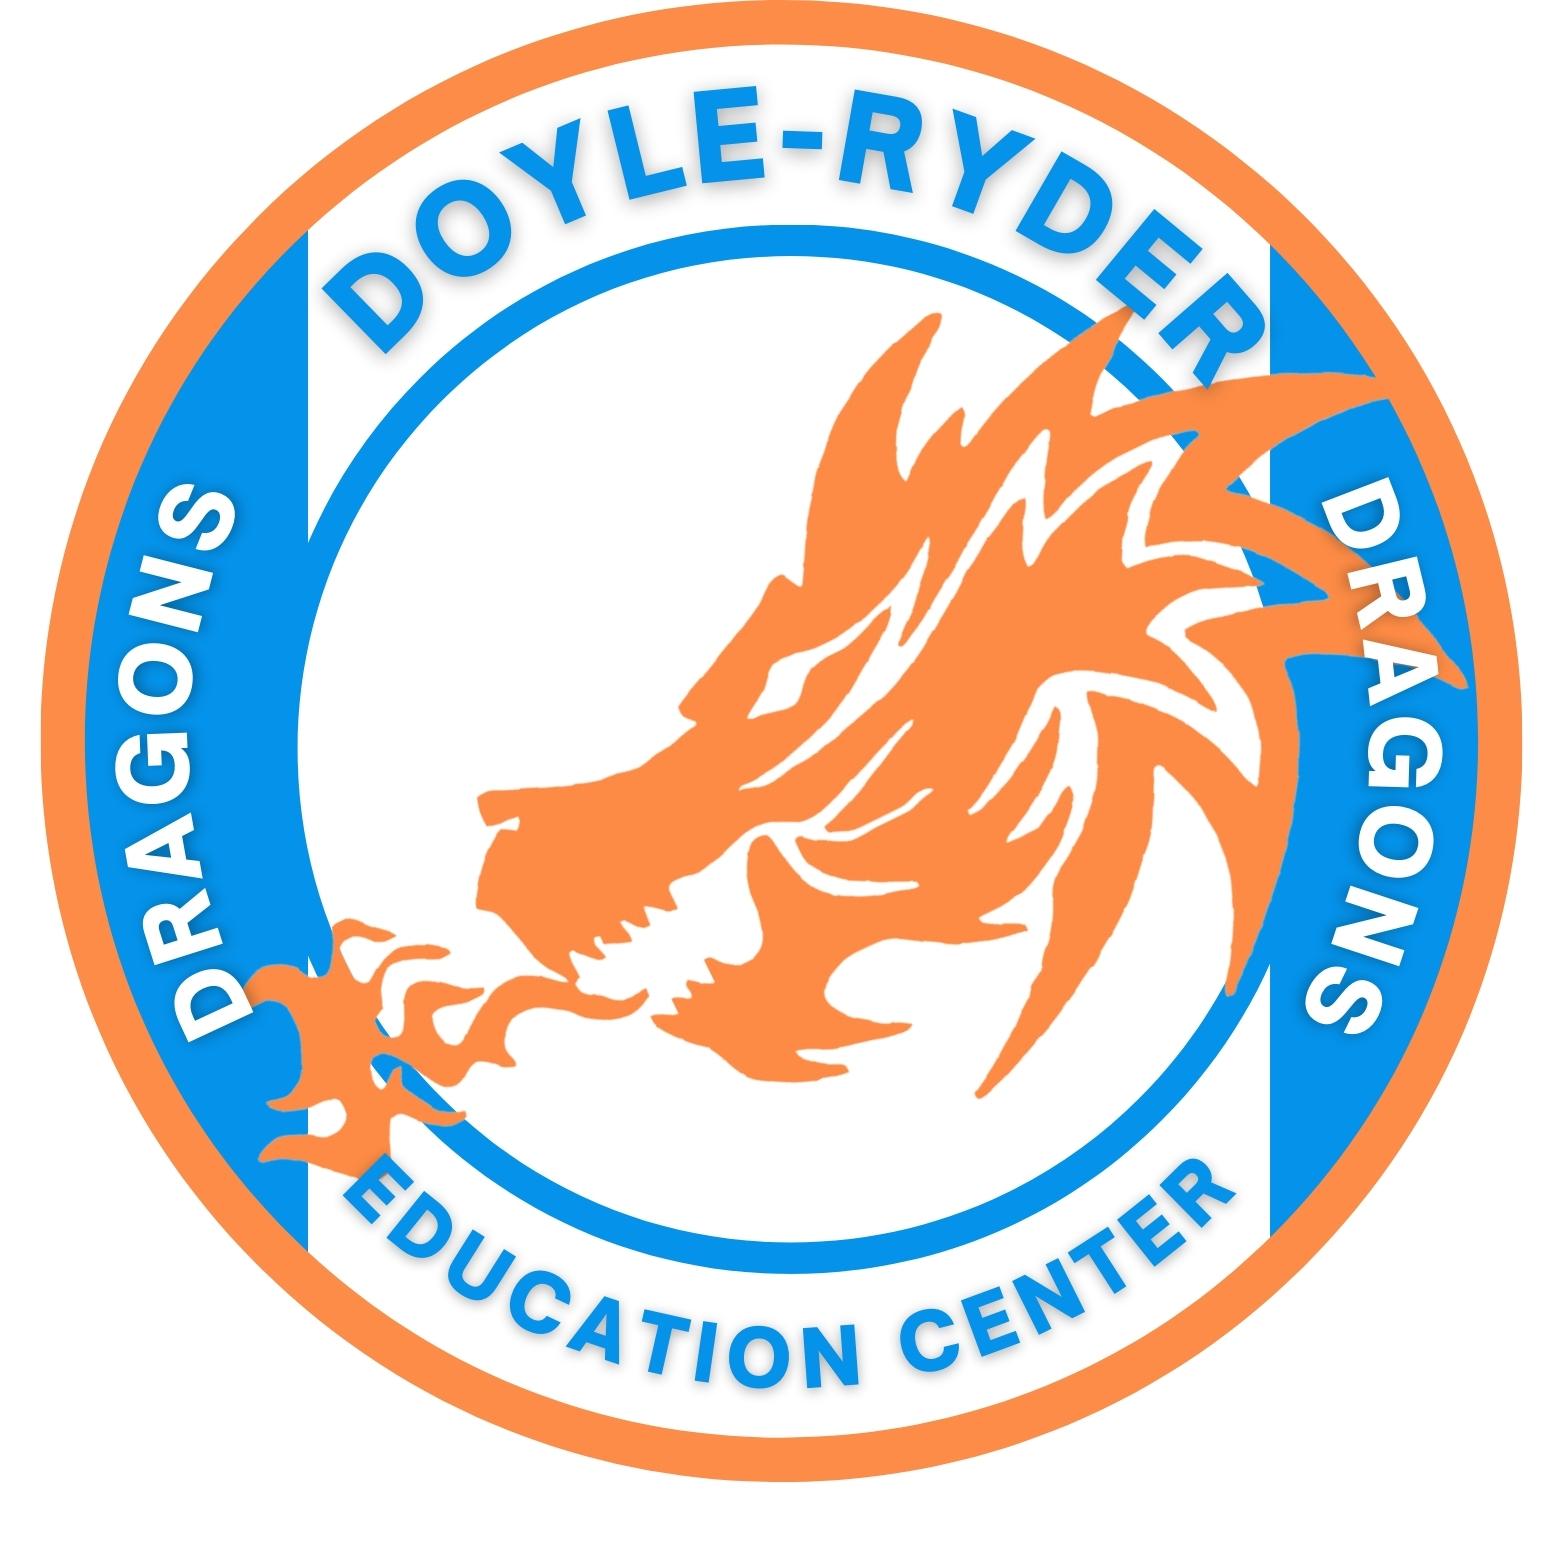 Doyle Ryder Education Center Logo